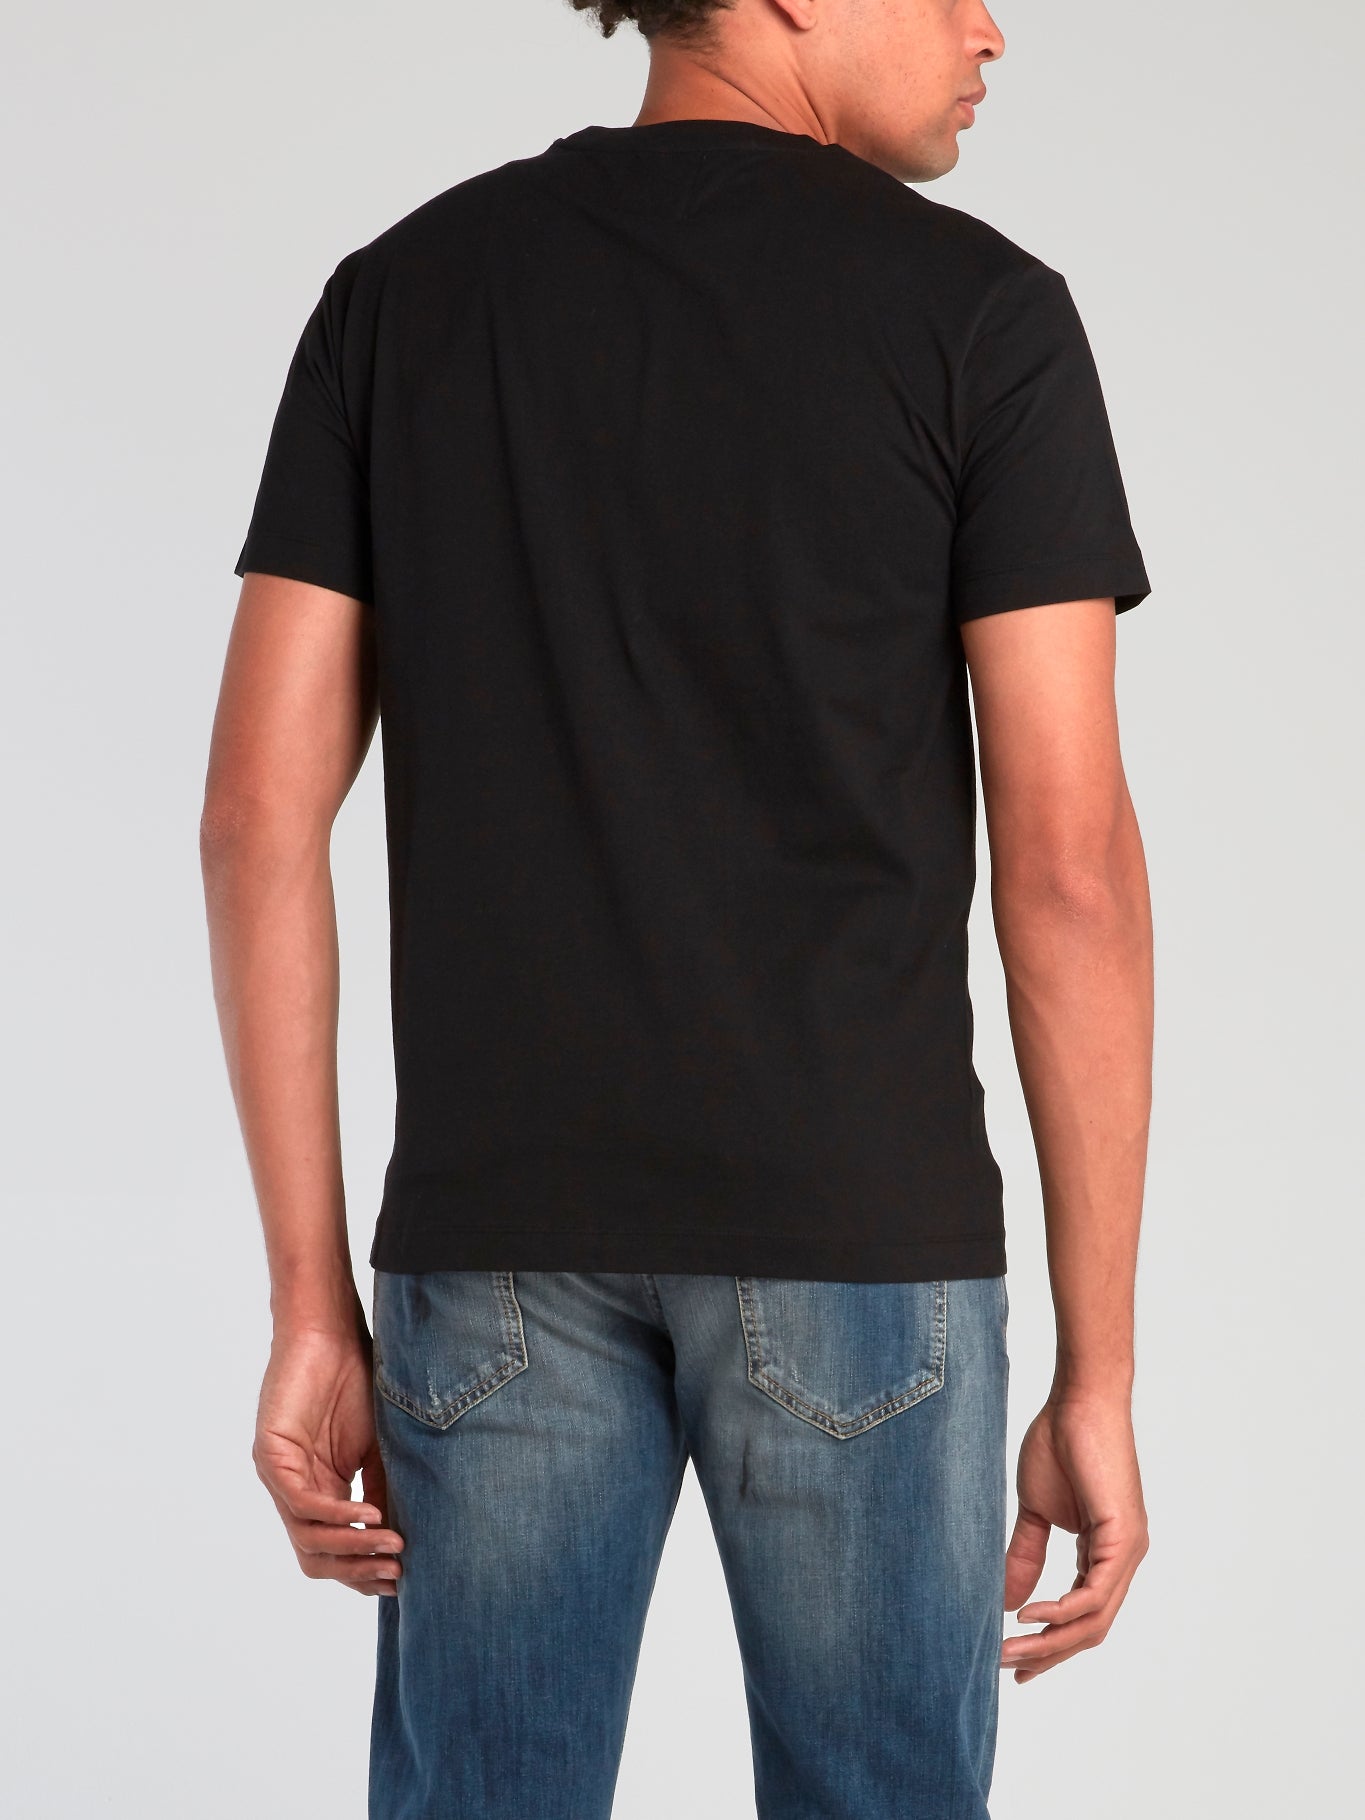 Black Barcode Print Crewneck T-Shirt